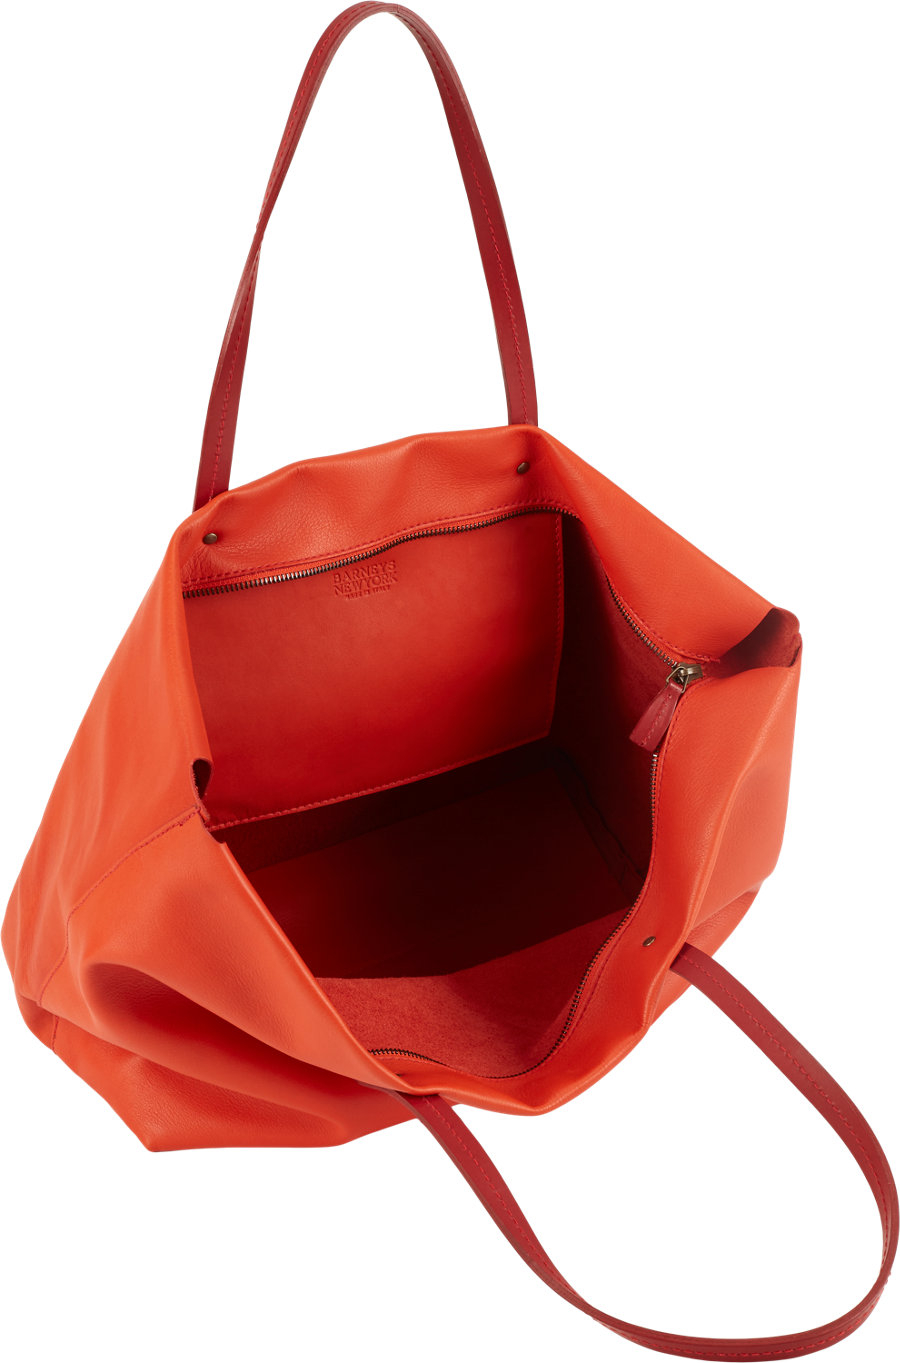 Barneys New York Ziptop Tote Bag in Red | Lyst